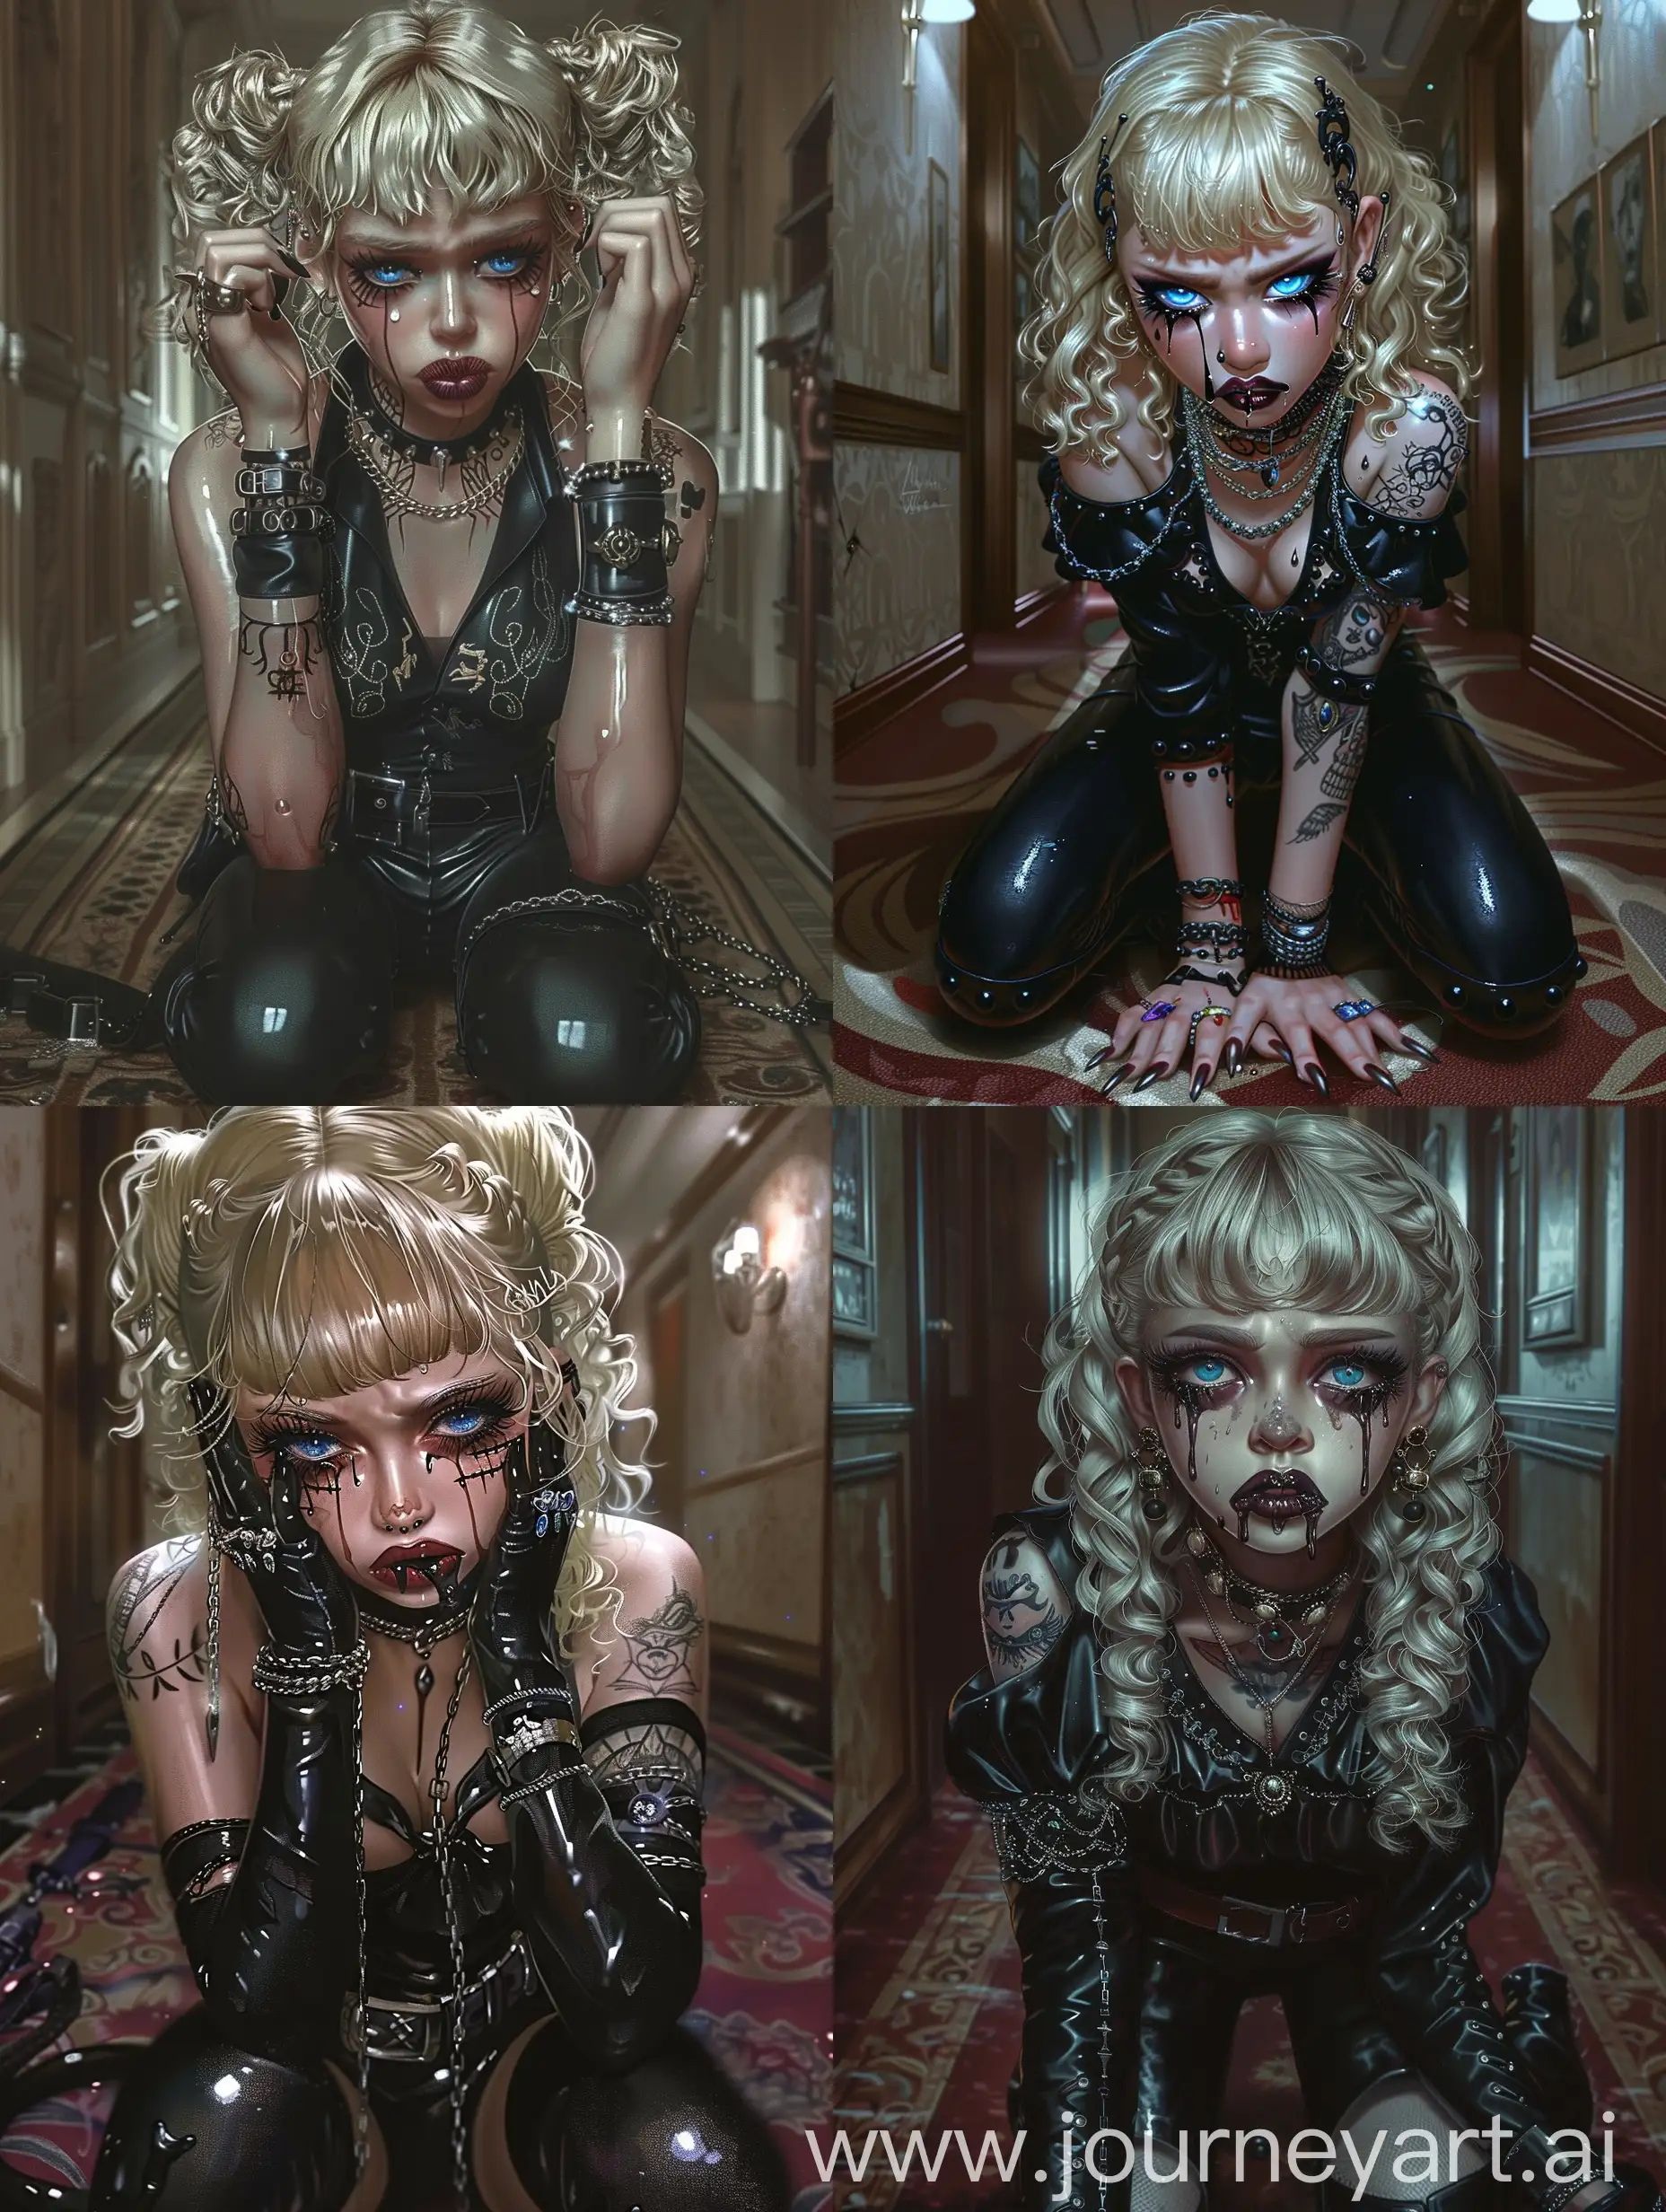 Sorrowful-Gothic-Goth-Girl-Kneeling-in-Haunted-Hotel-Corridor